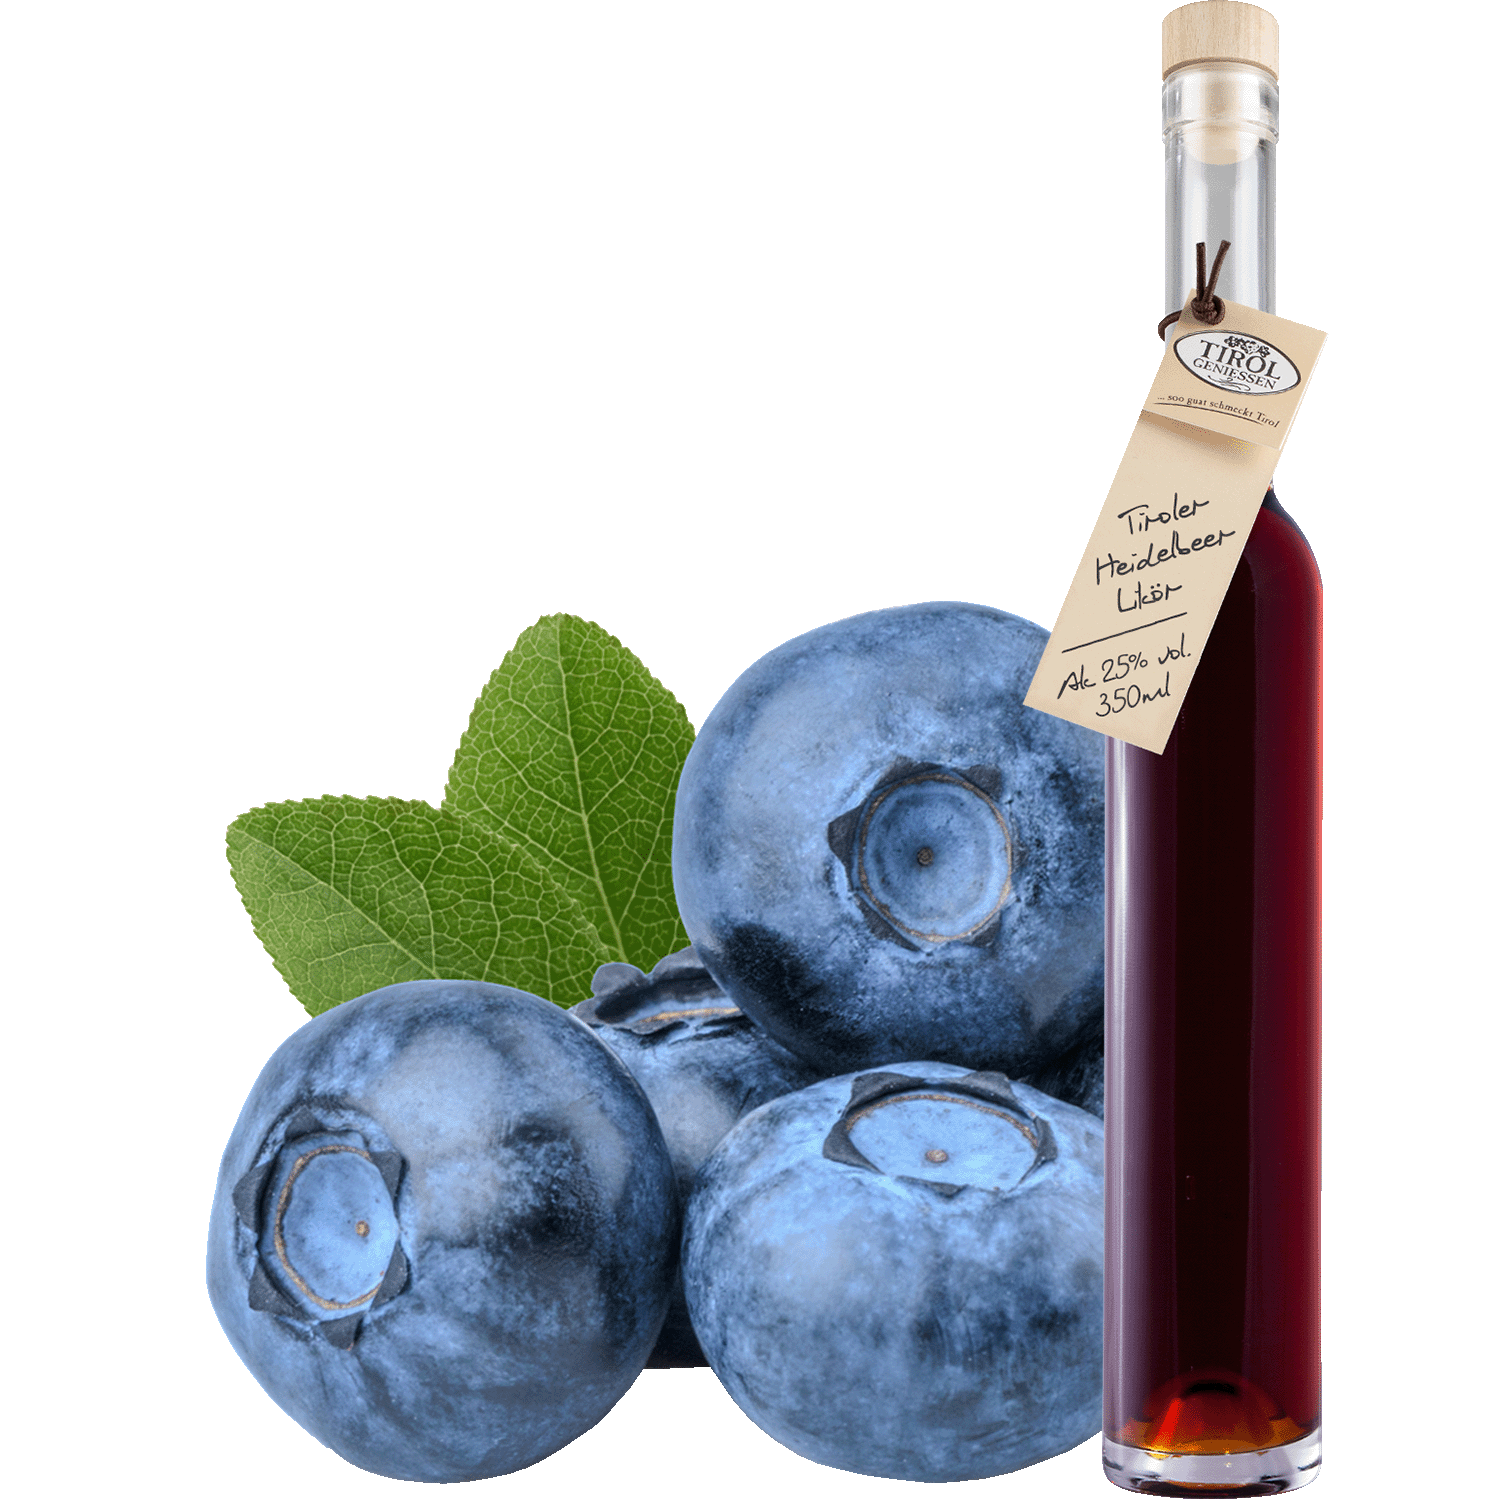 Bilberry Liqueur in gift bottle from Austria from Tirol Geniessen